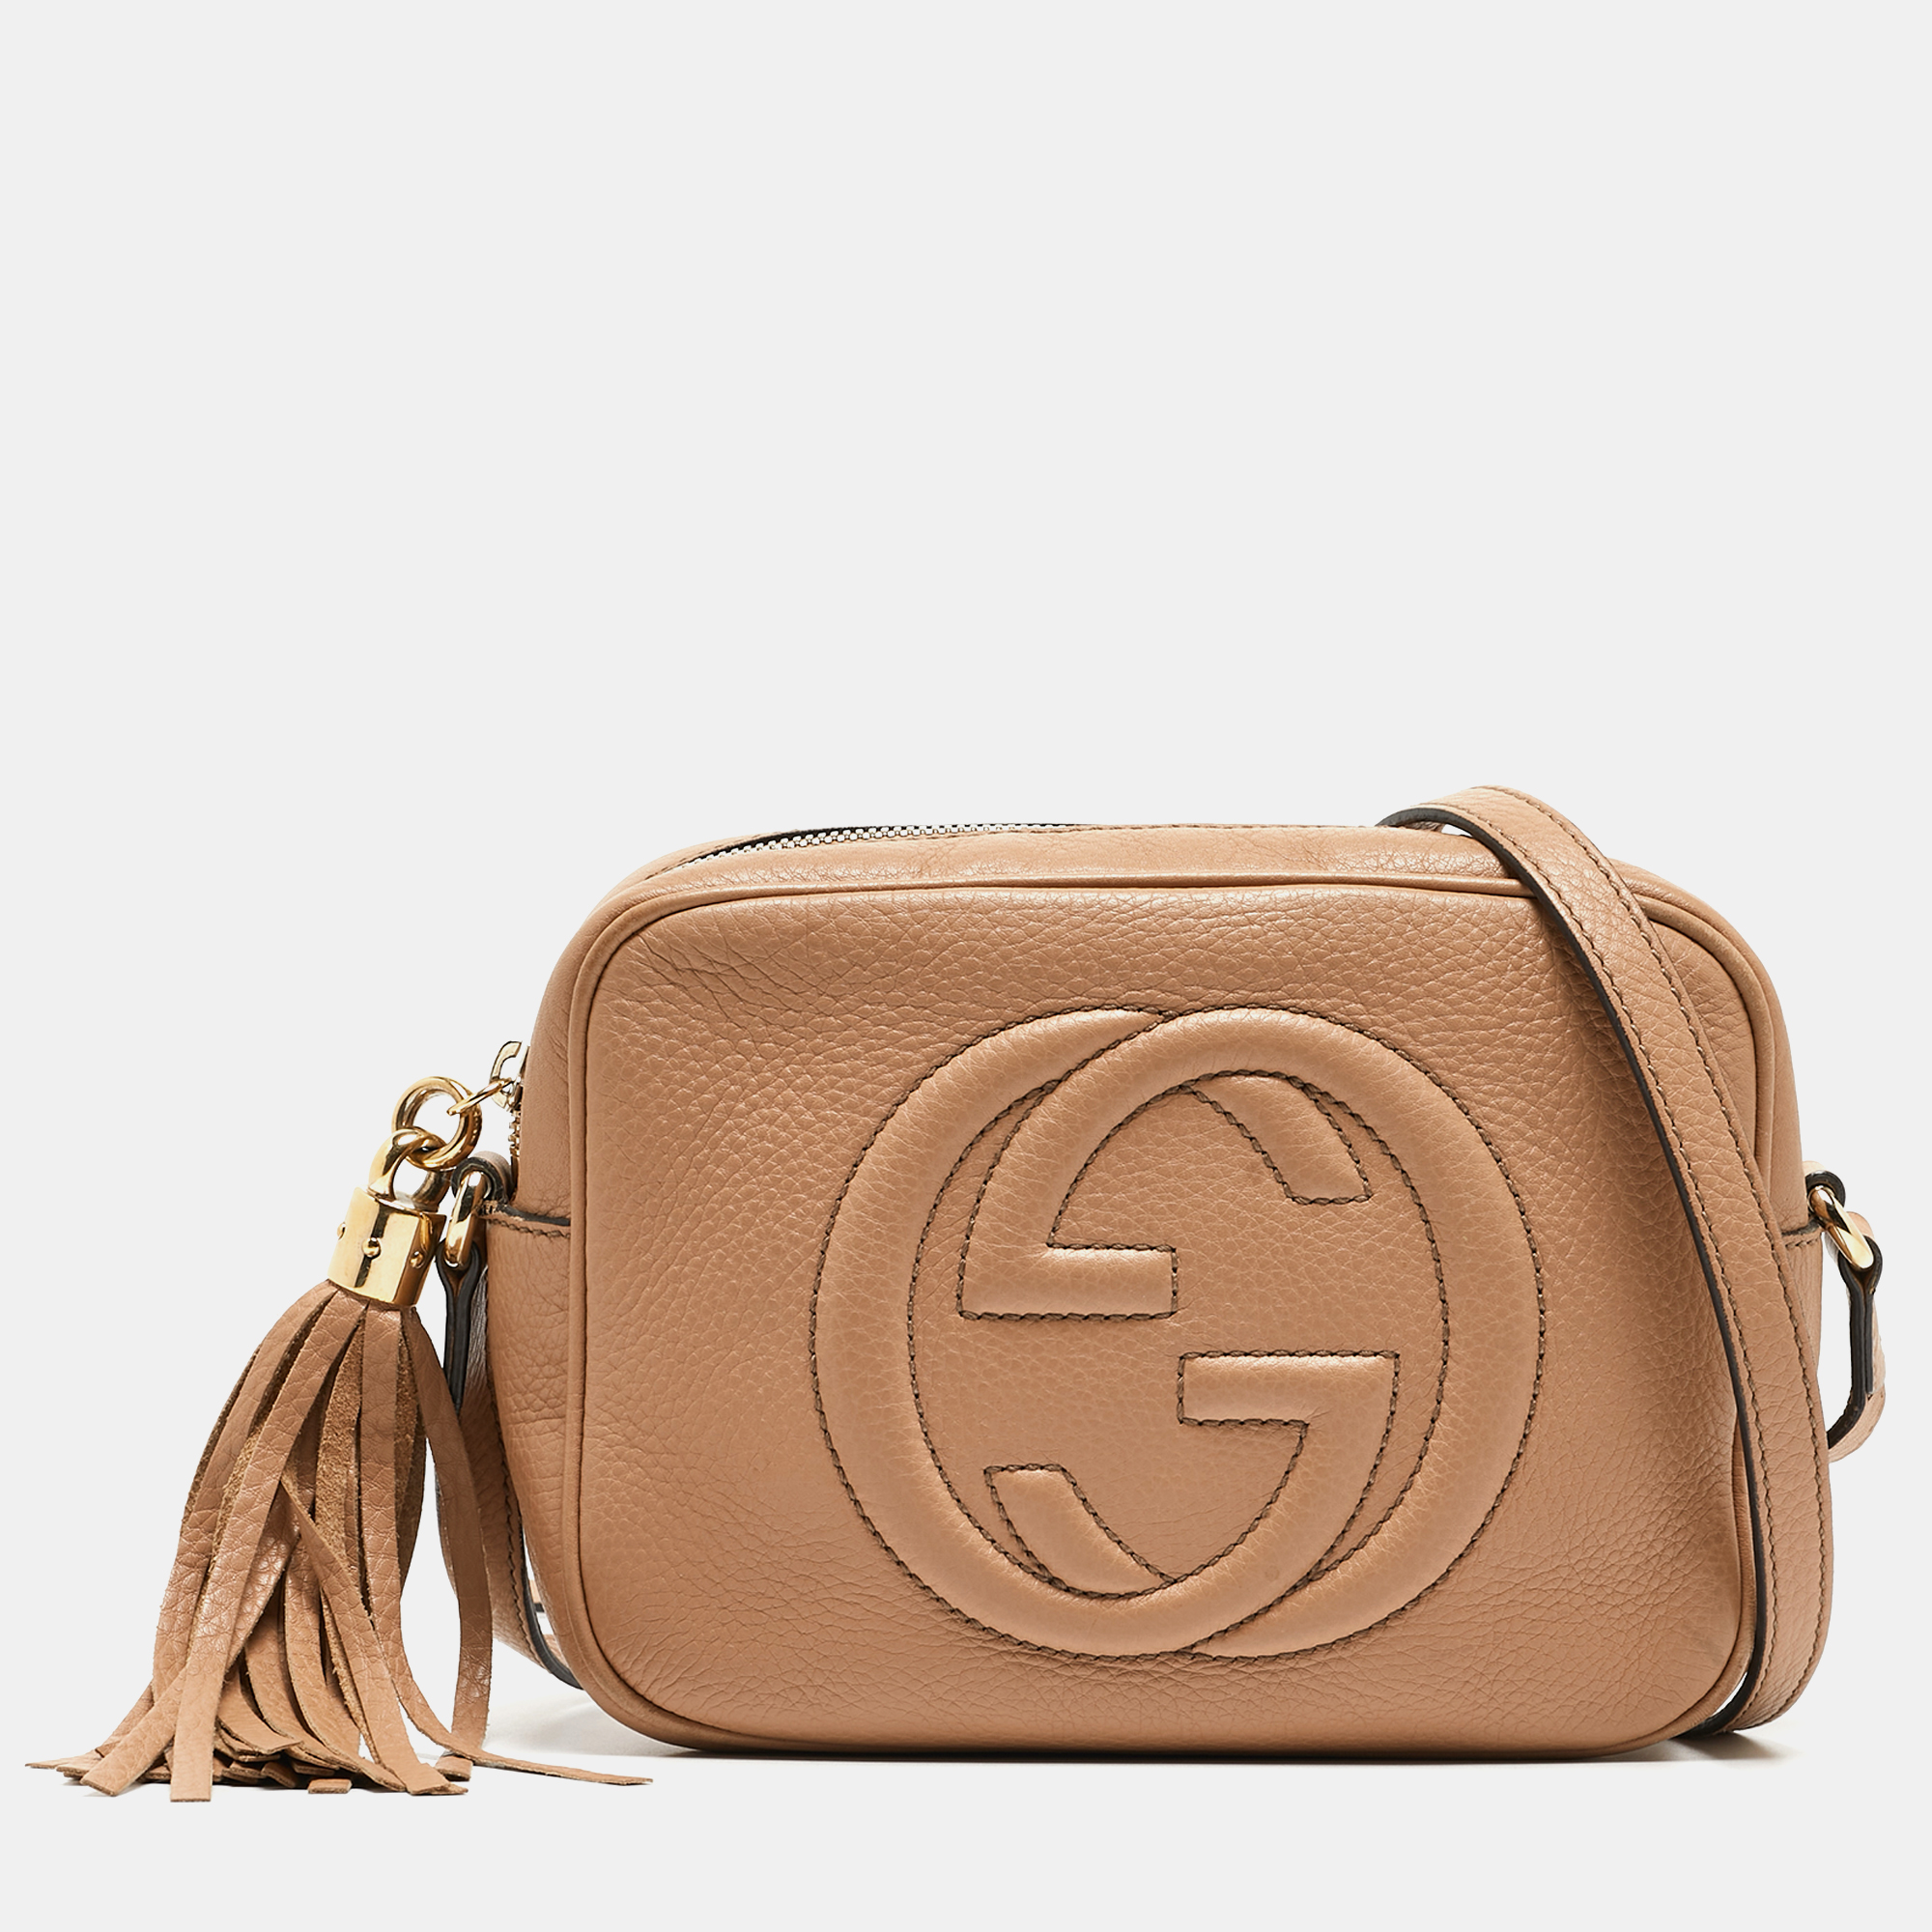 Gucci Beige Leather Small Soho Disco Crossbody Bag